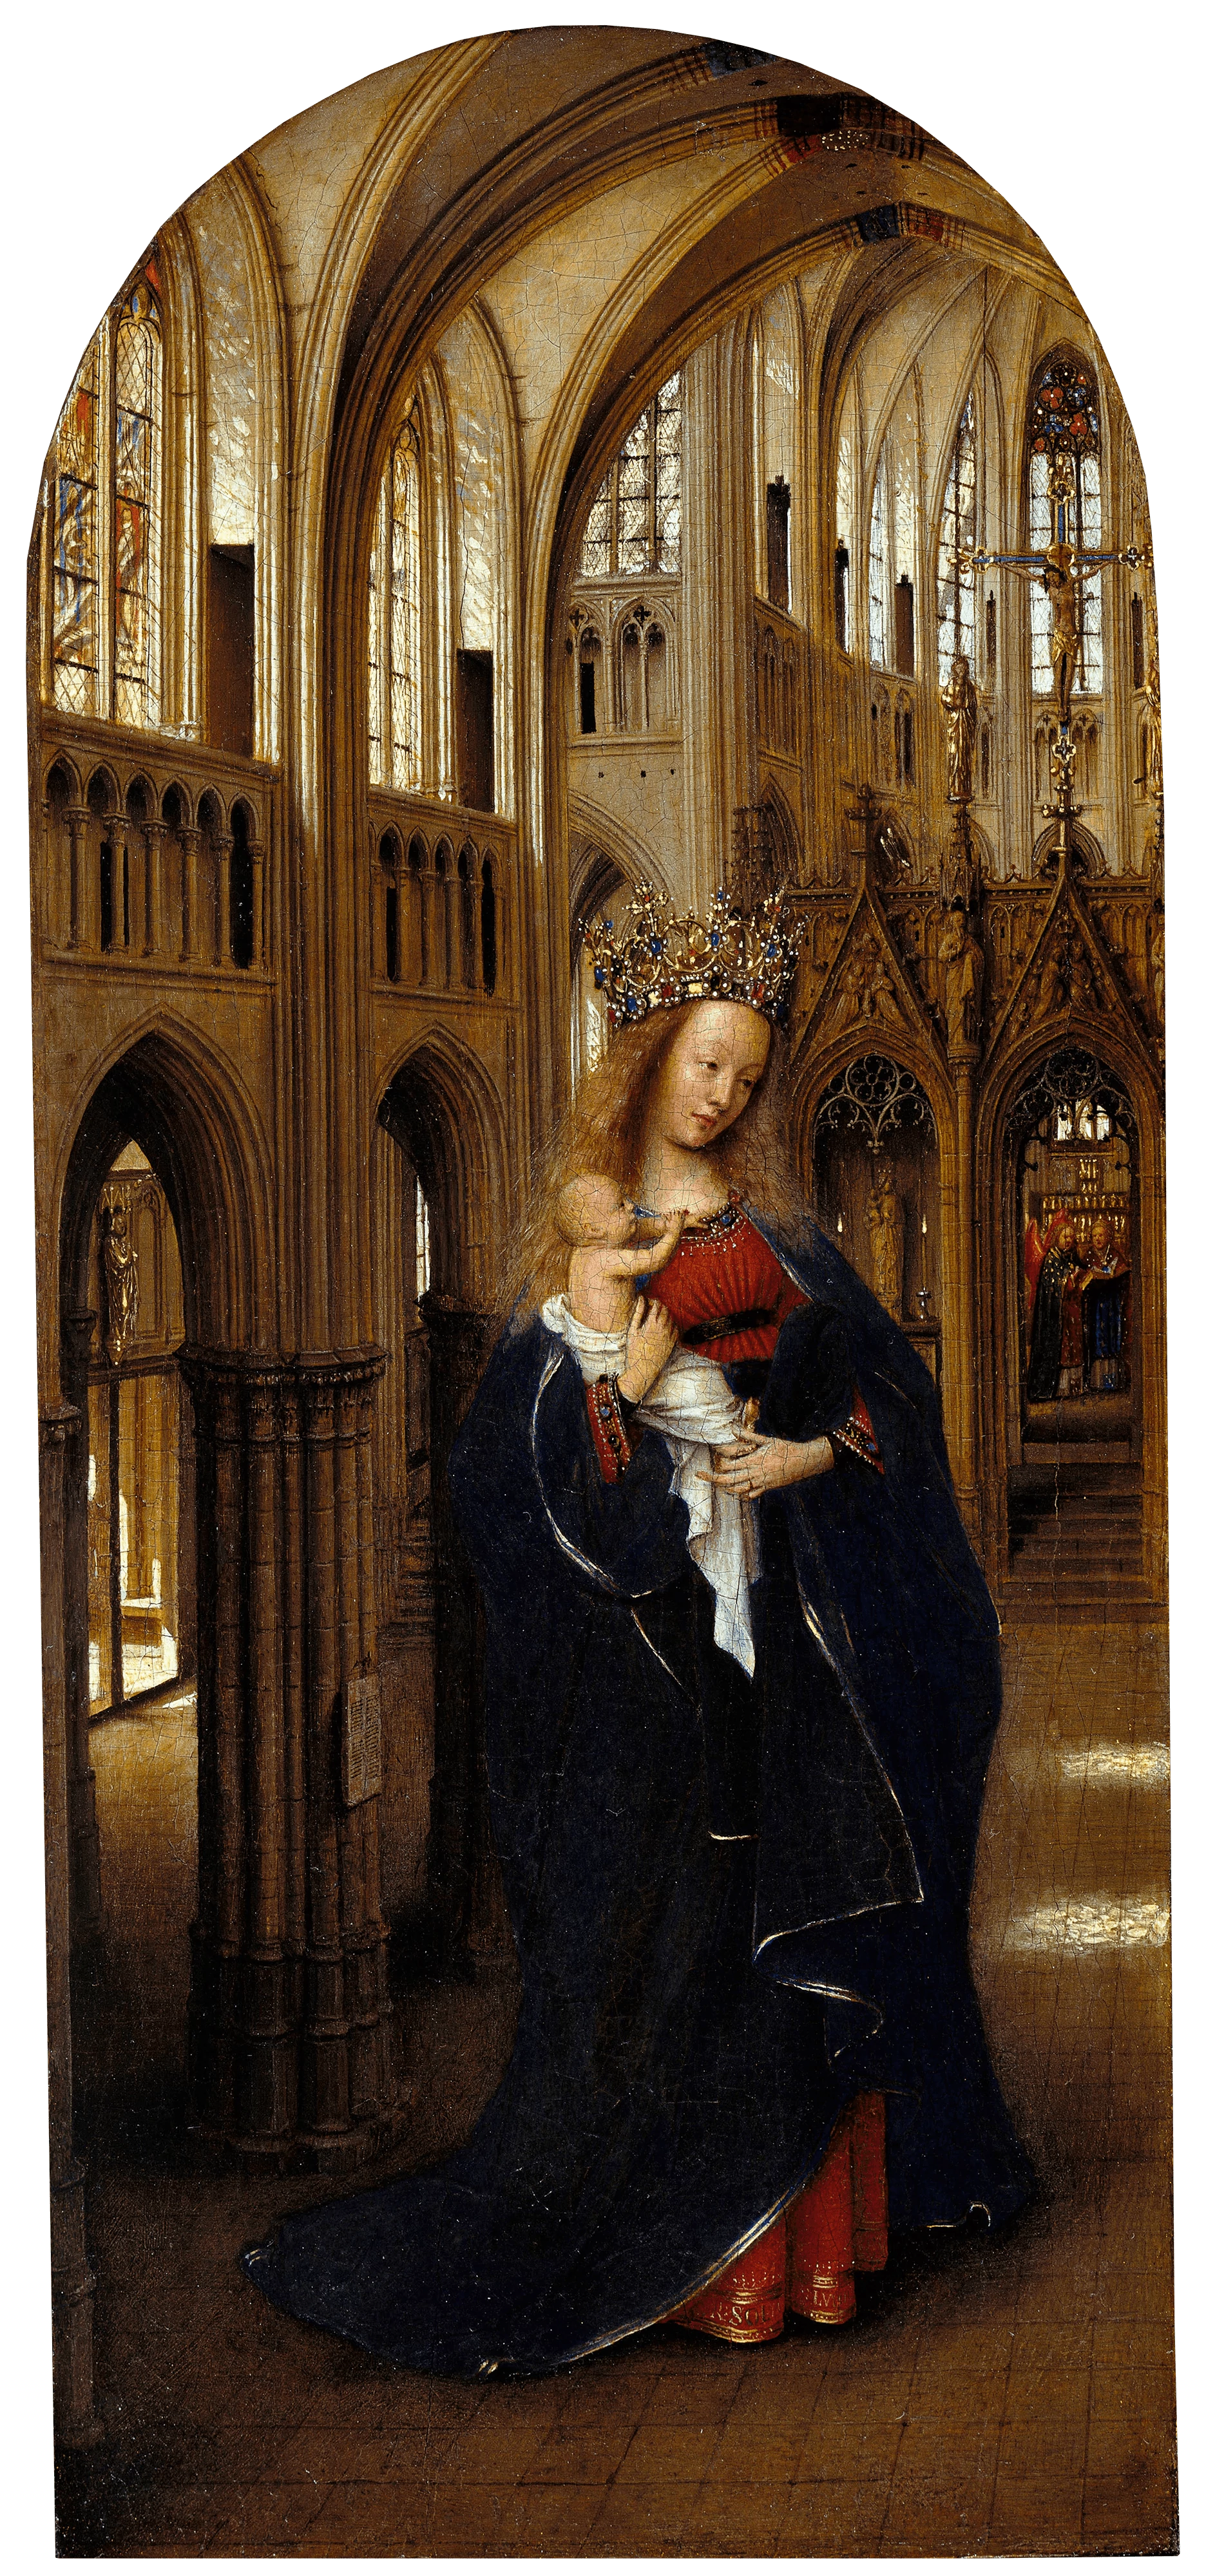 The Madonna in the Church, Jan Van Eyck